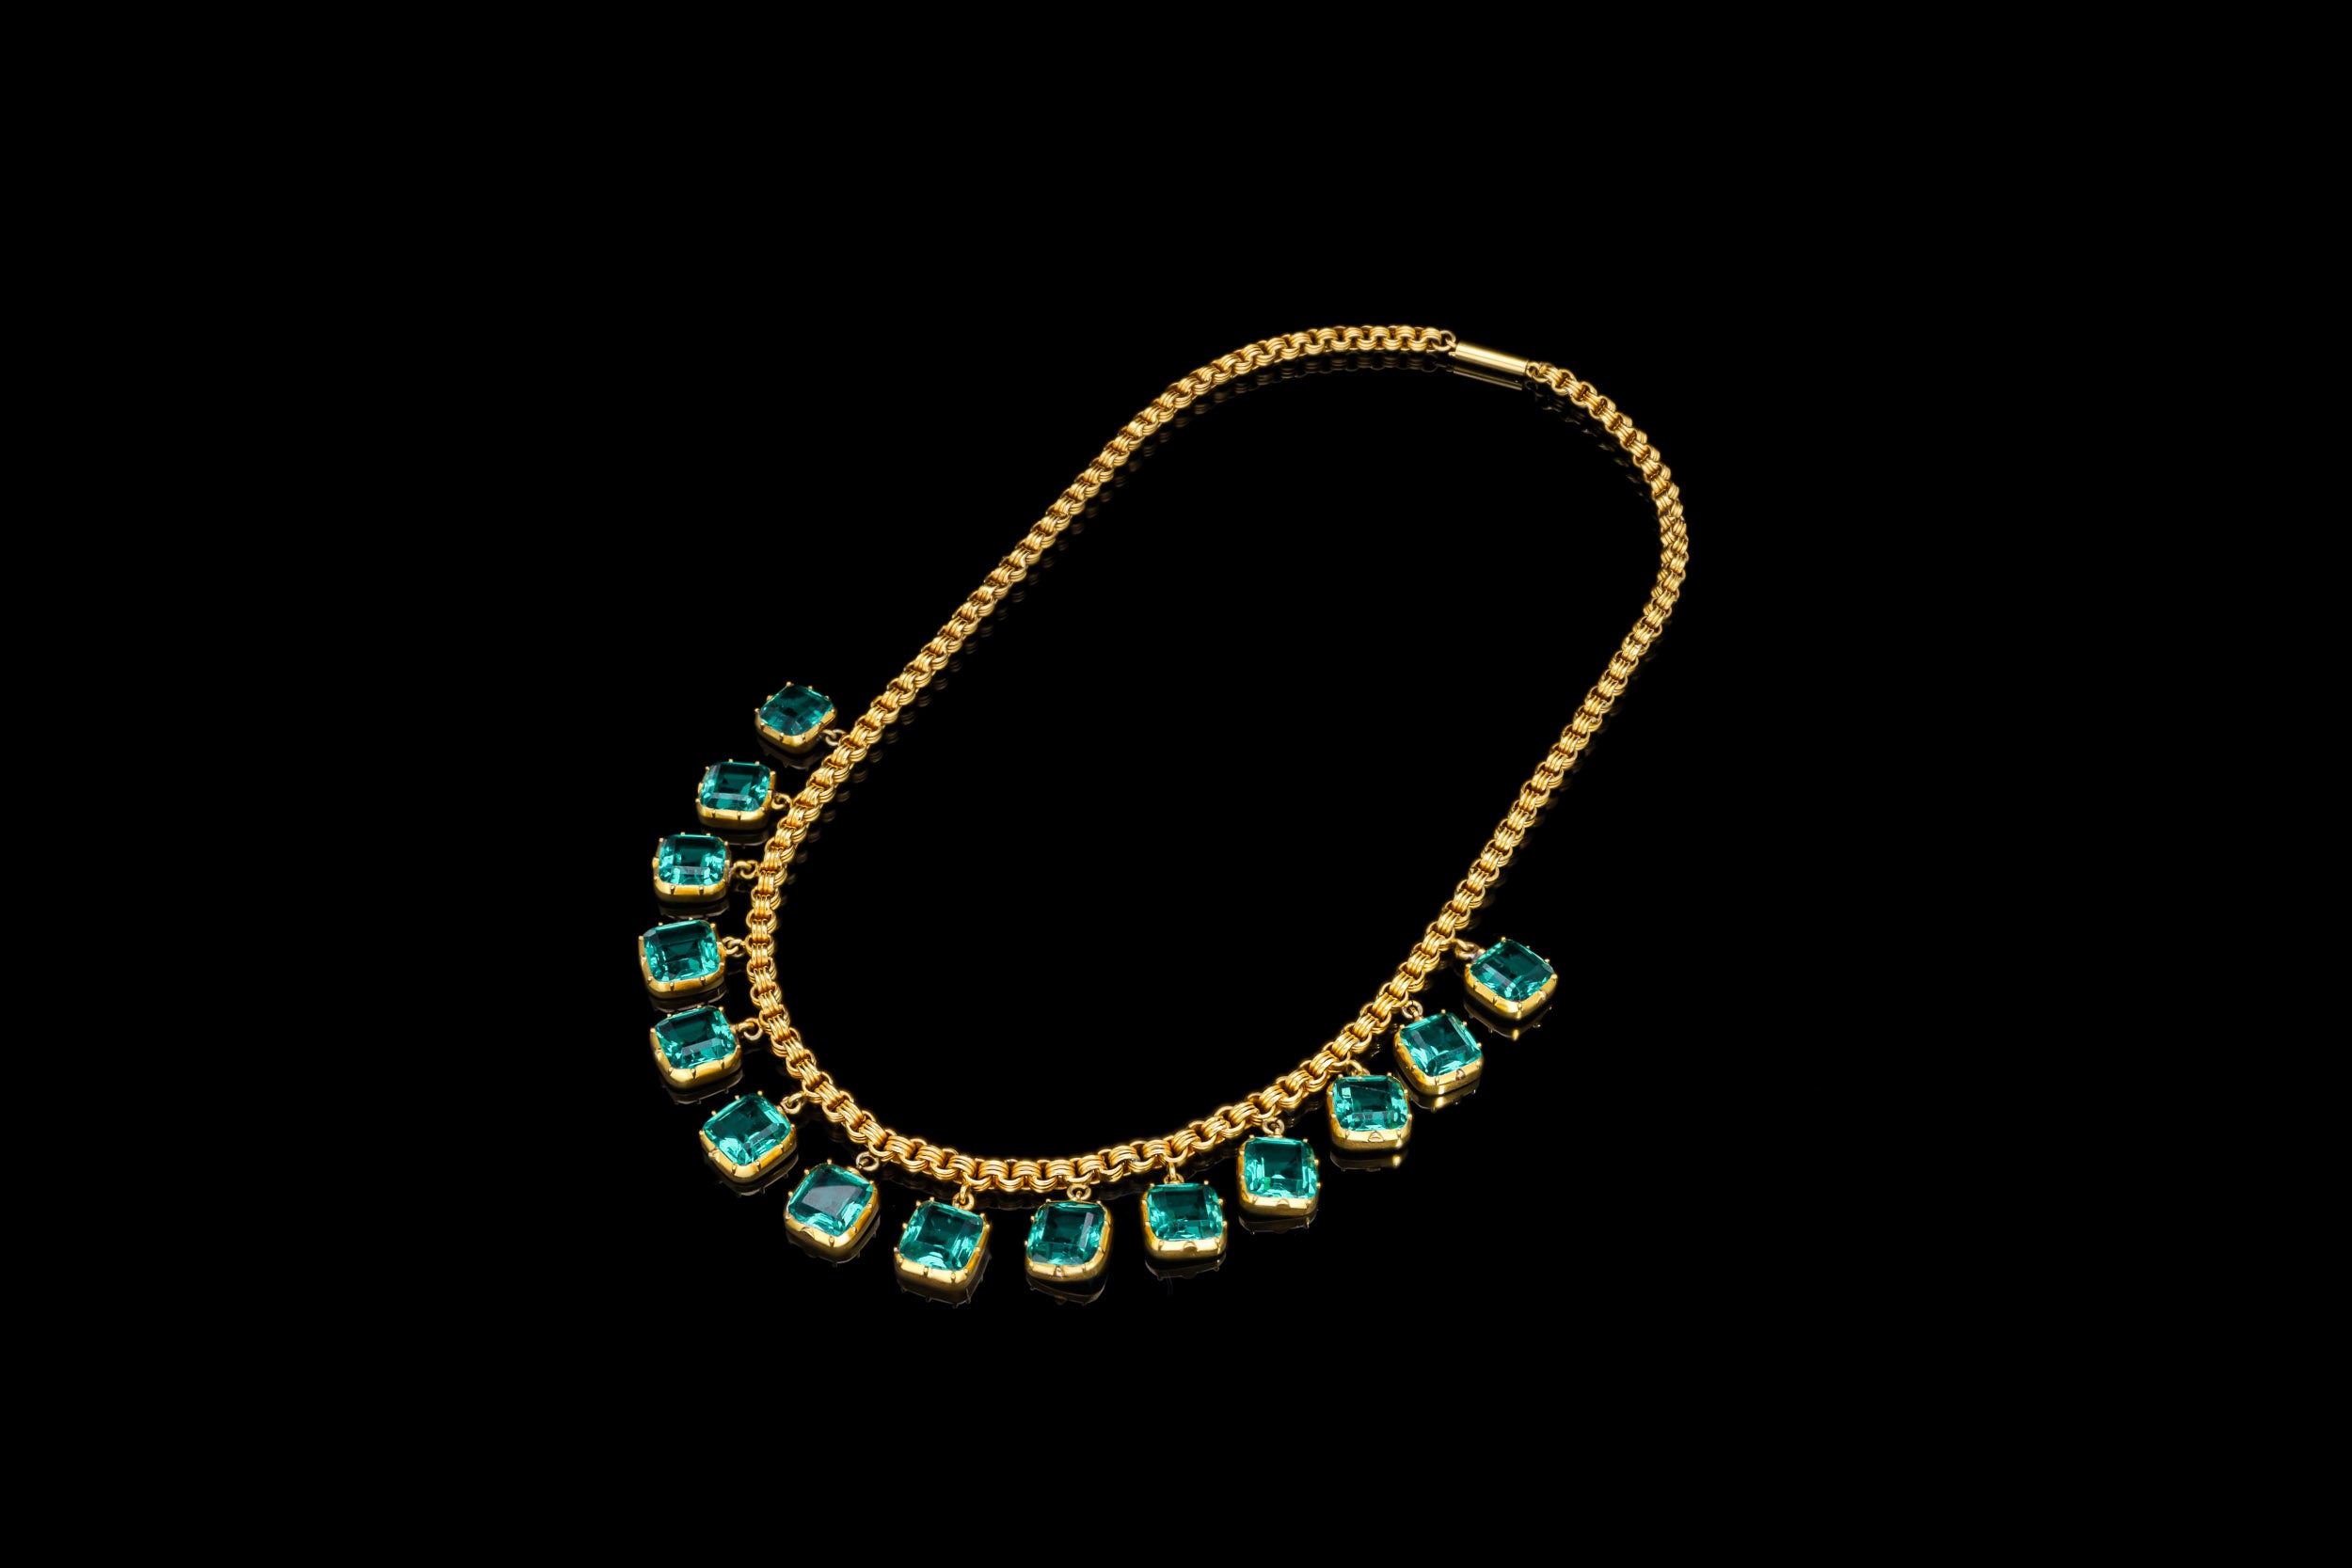 Antique Paste Necklace - Wildsmith Jewellery Necklaces